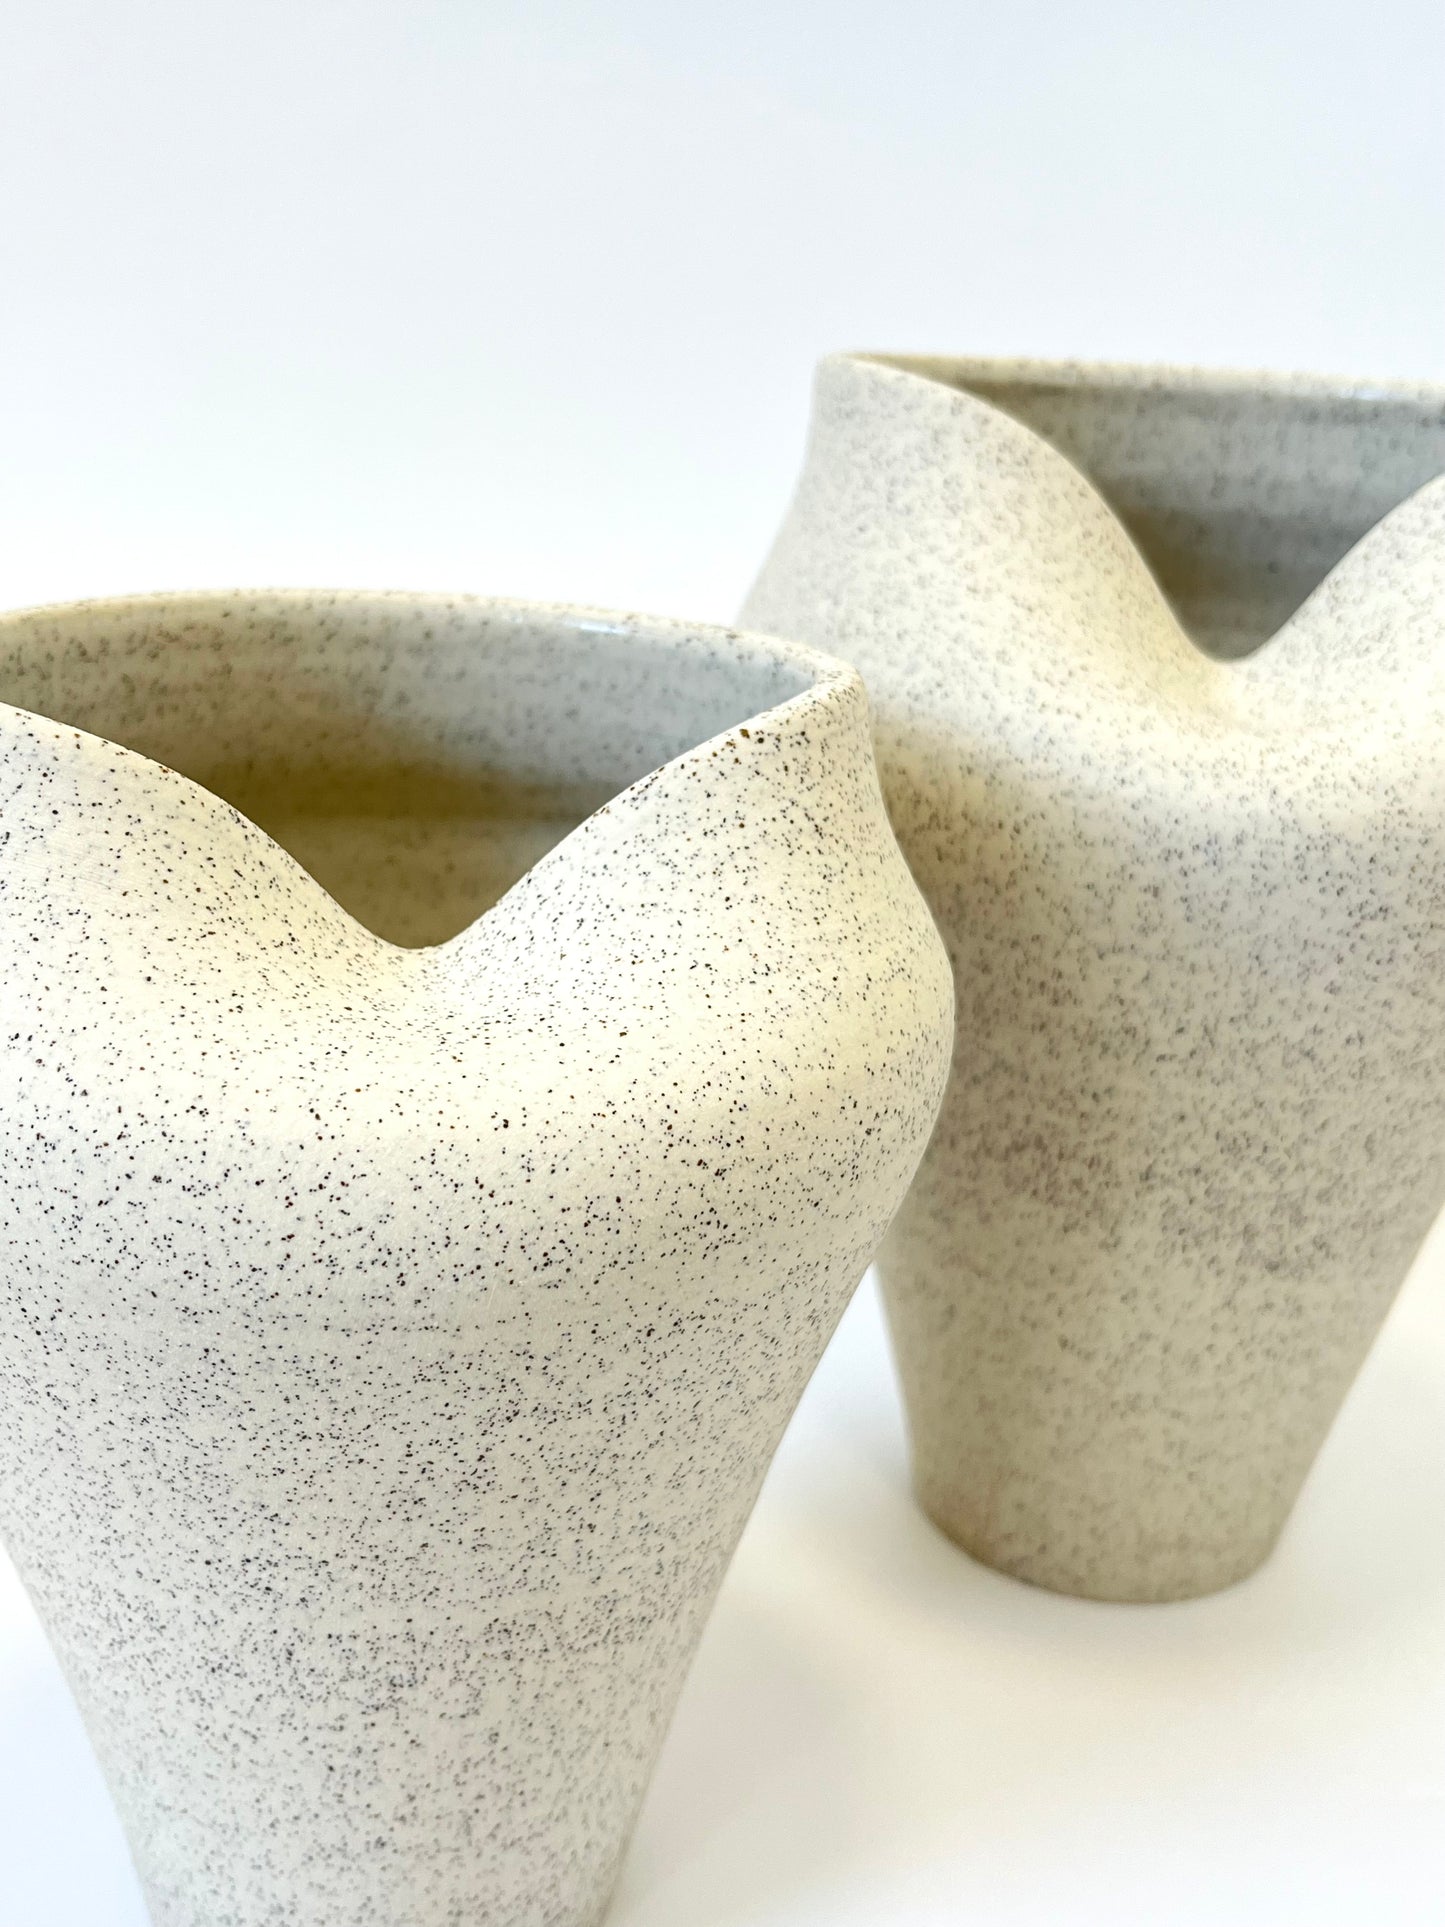 Handmade Ceramic 'Pillow Vase' - Coastal - Large